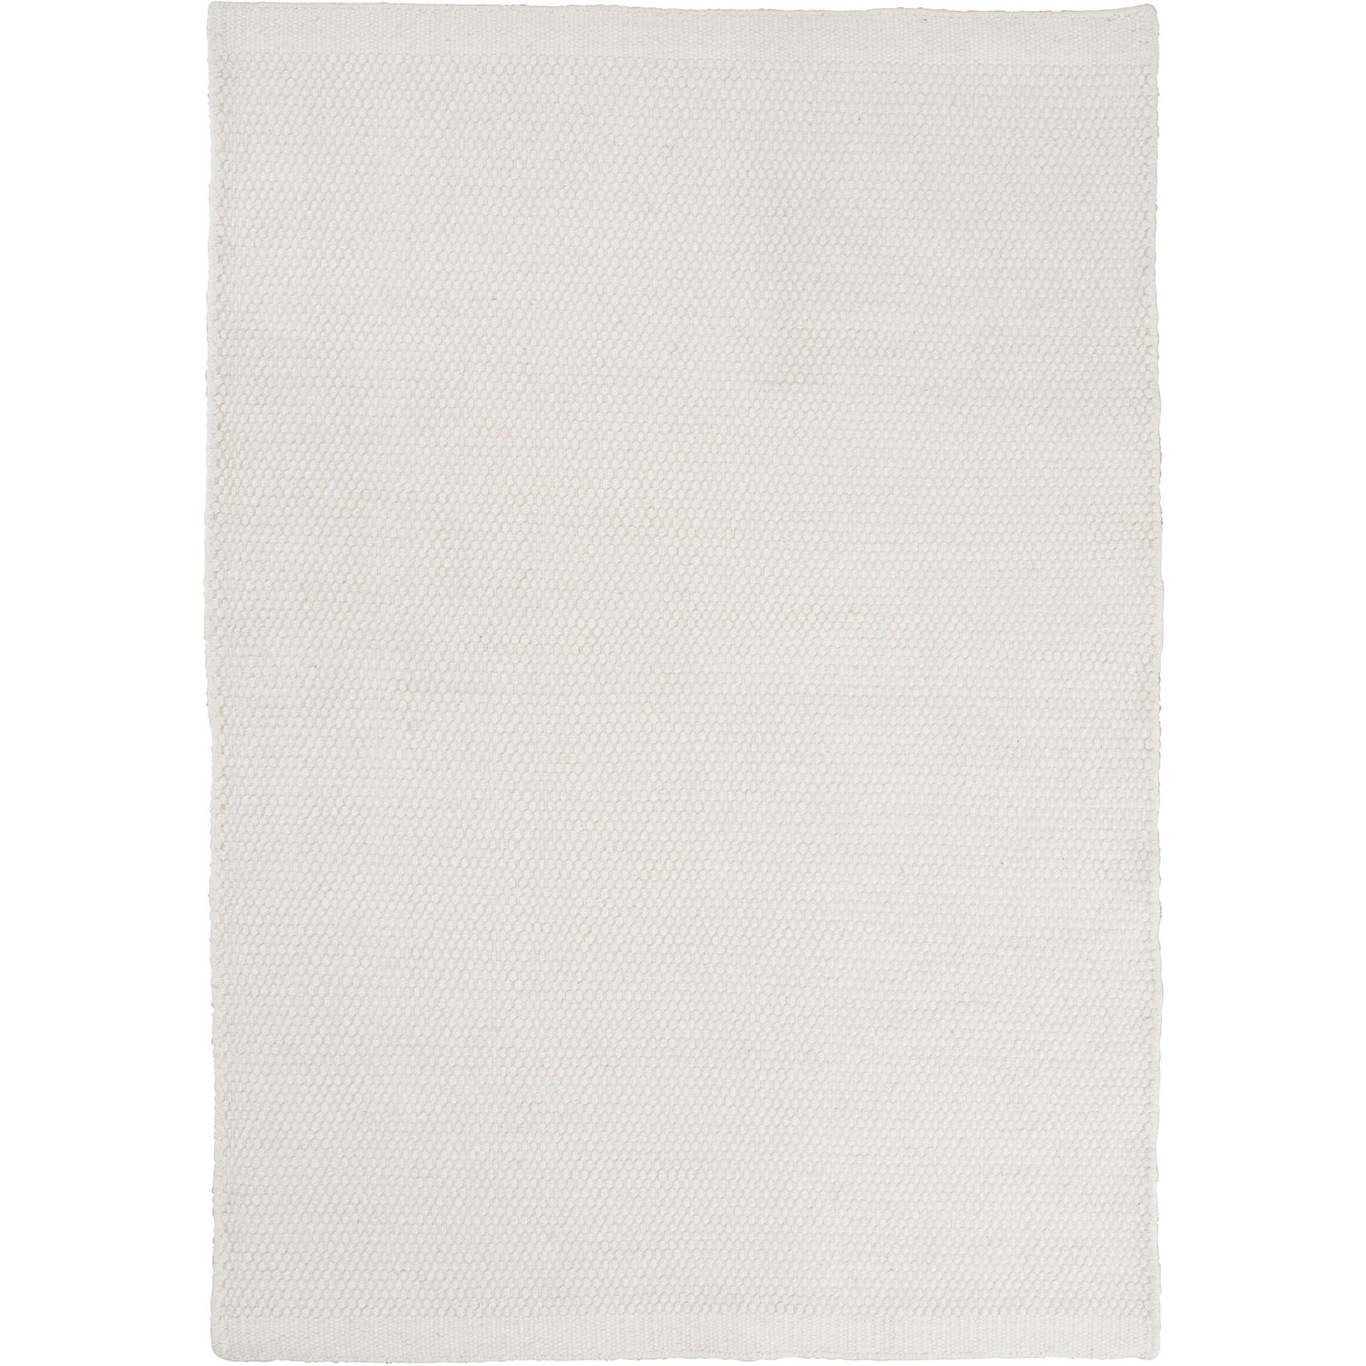 Asko Rug White, 170x240 cm